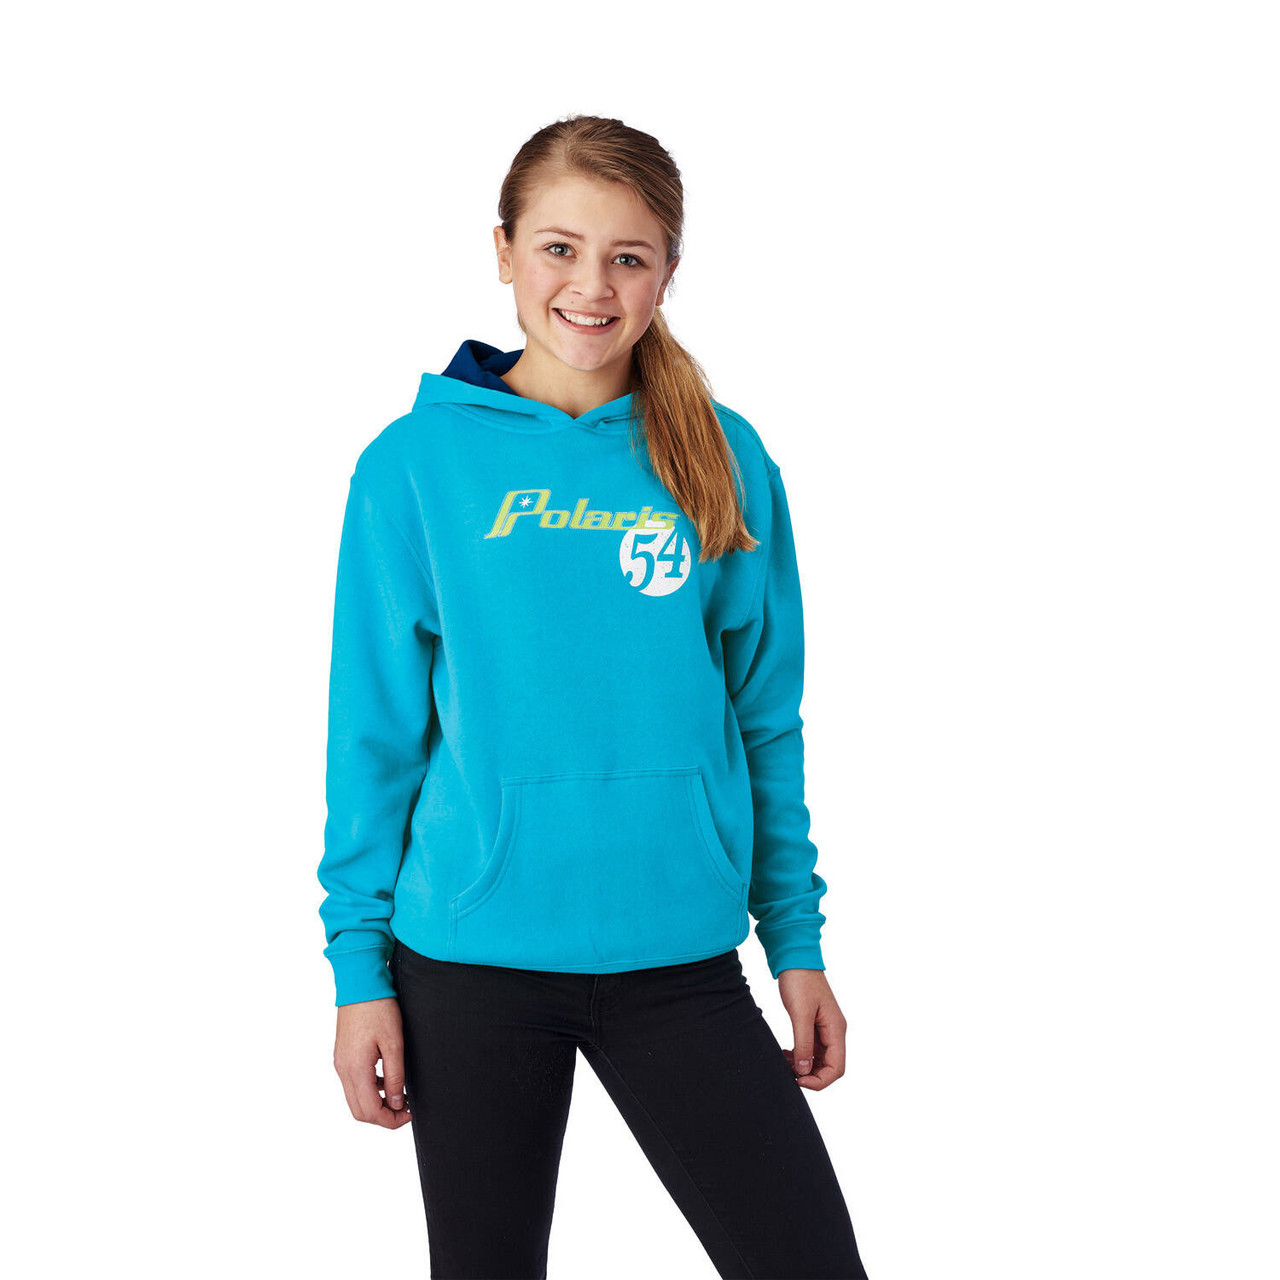 Polaris New OEM Youth Large Hoodie Sweatshirt with Logo, 286860806